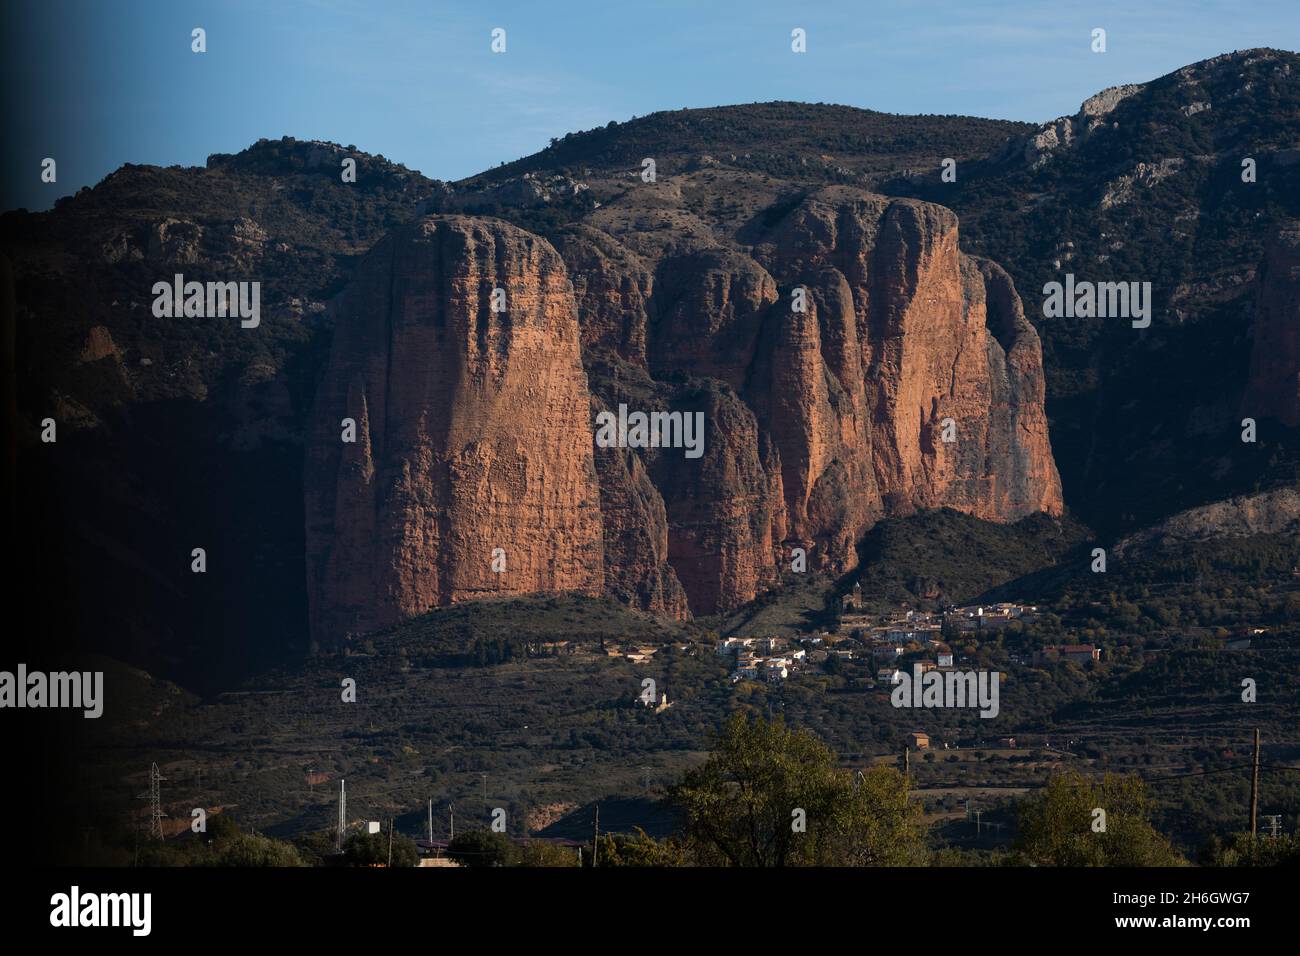 Landscape of Los Mallos de Riglos, or Mallets of Riglos, a huge conglomerate of rock formations, in the Hoya de Huesca region, Aragon, Spain Stock Photo